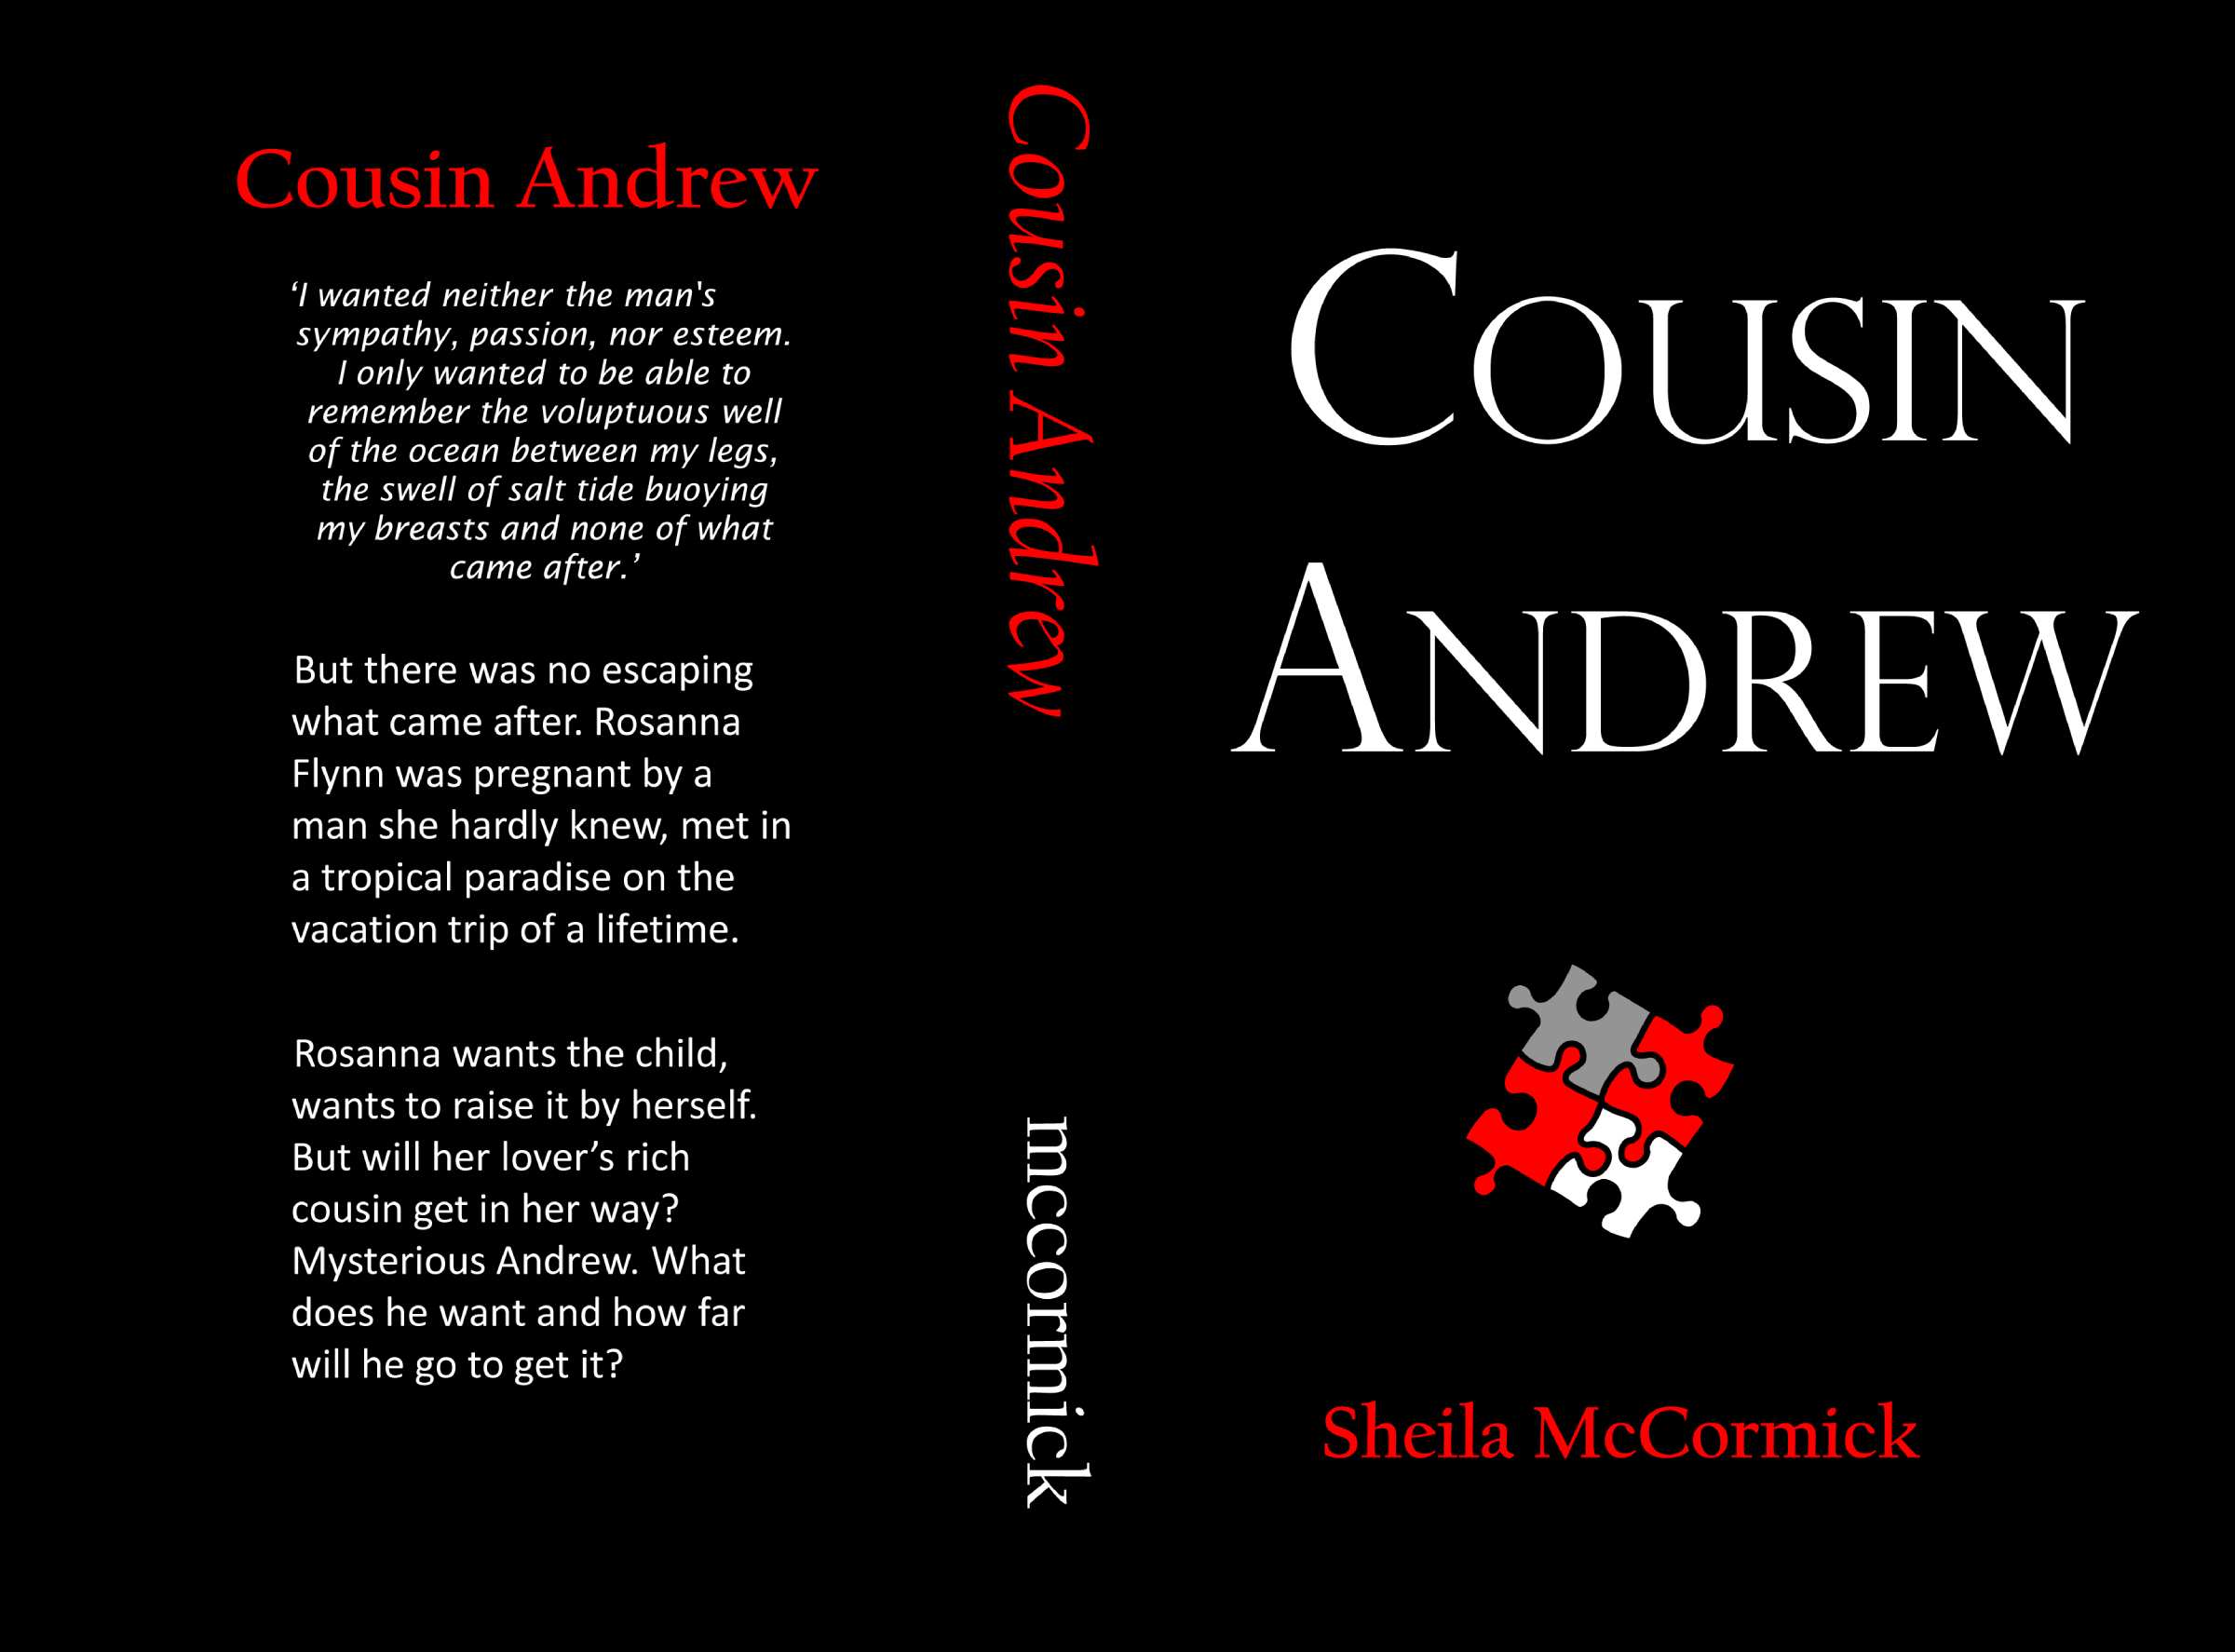 Cousin-Andrew-r-smaller-fontresizeblack-poster-1